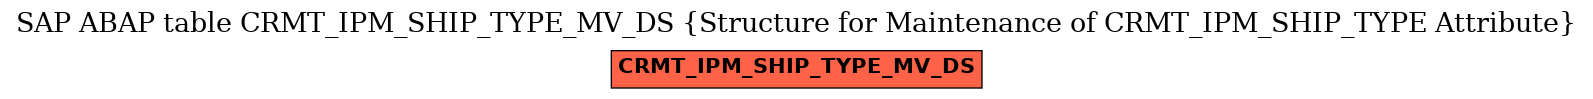 E-R Diagram for table CRMT_IPM_SHIP_TYPE_MV_DS (Structure for Maintenance of CRMT_IPM_SHIP_TYPE Attribute)